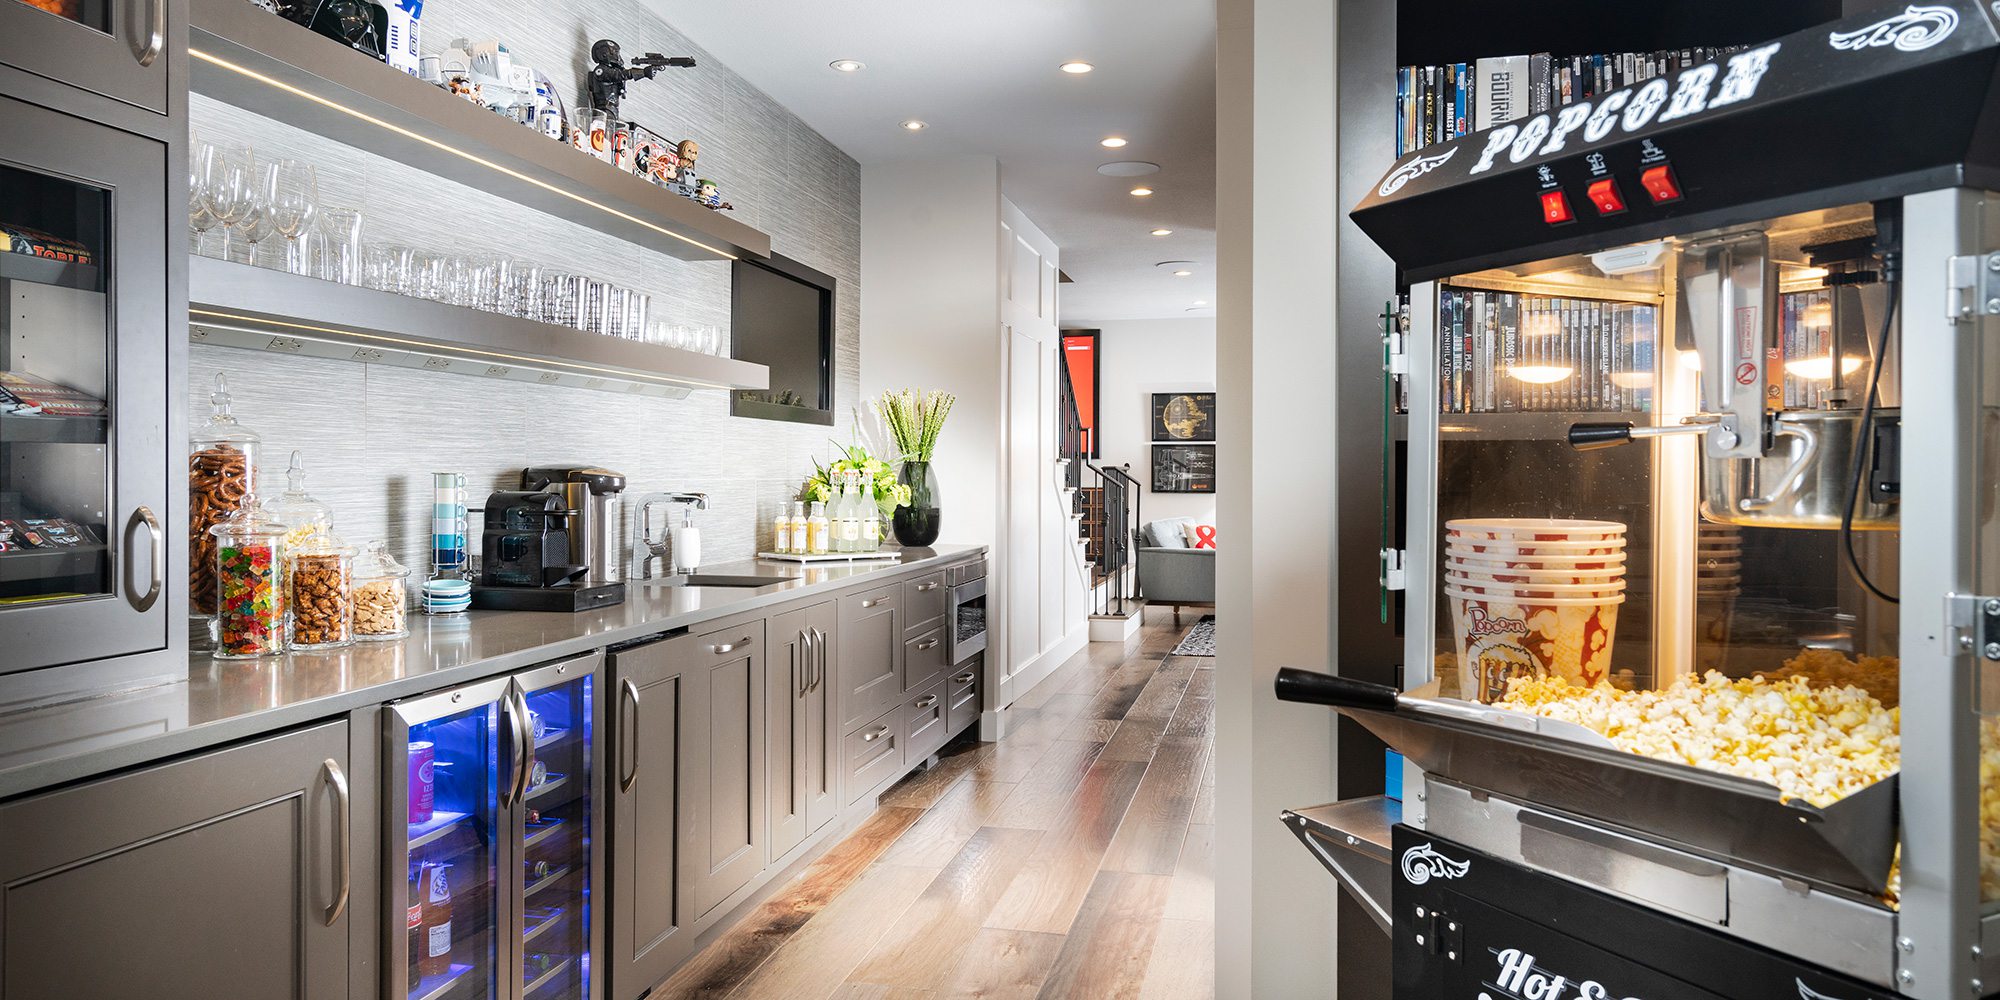 417 Home Design Awards 2020 Winner of Best Living Space by Obelisk Home Springfield MO